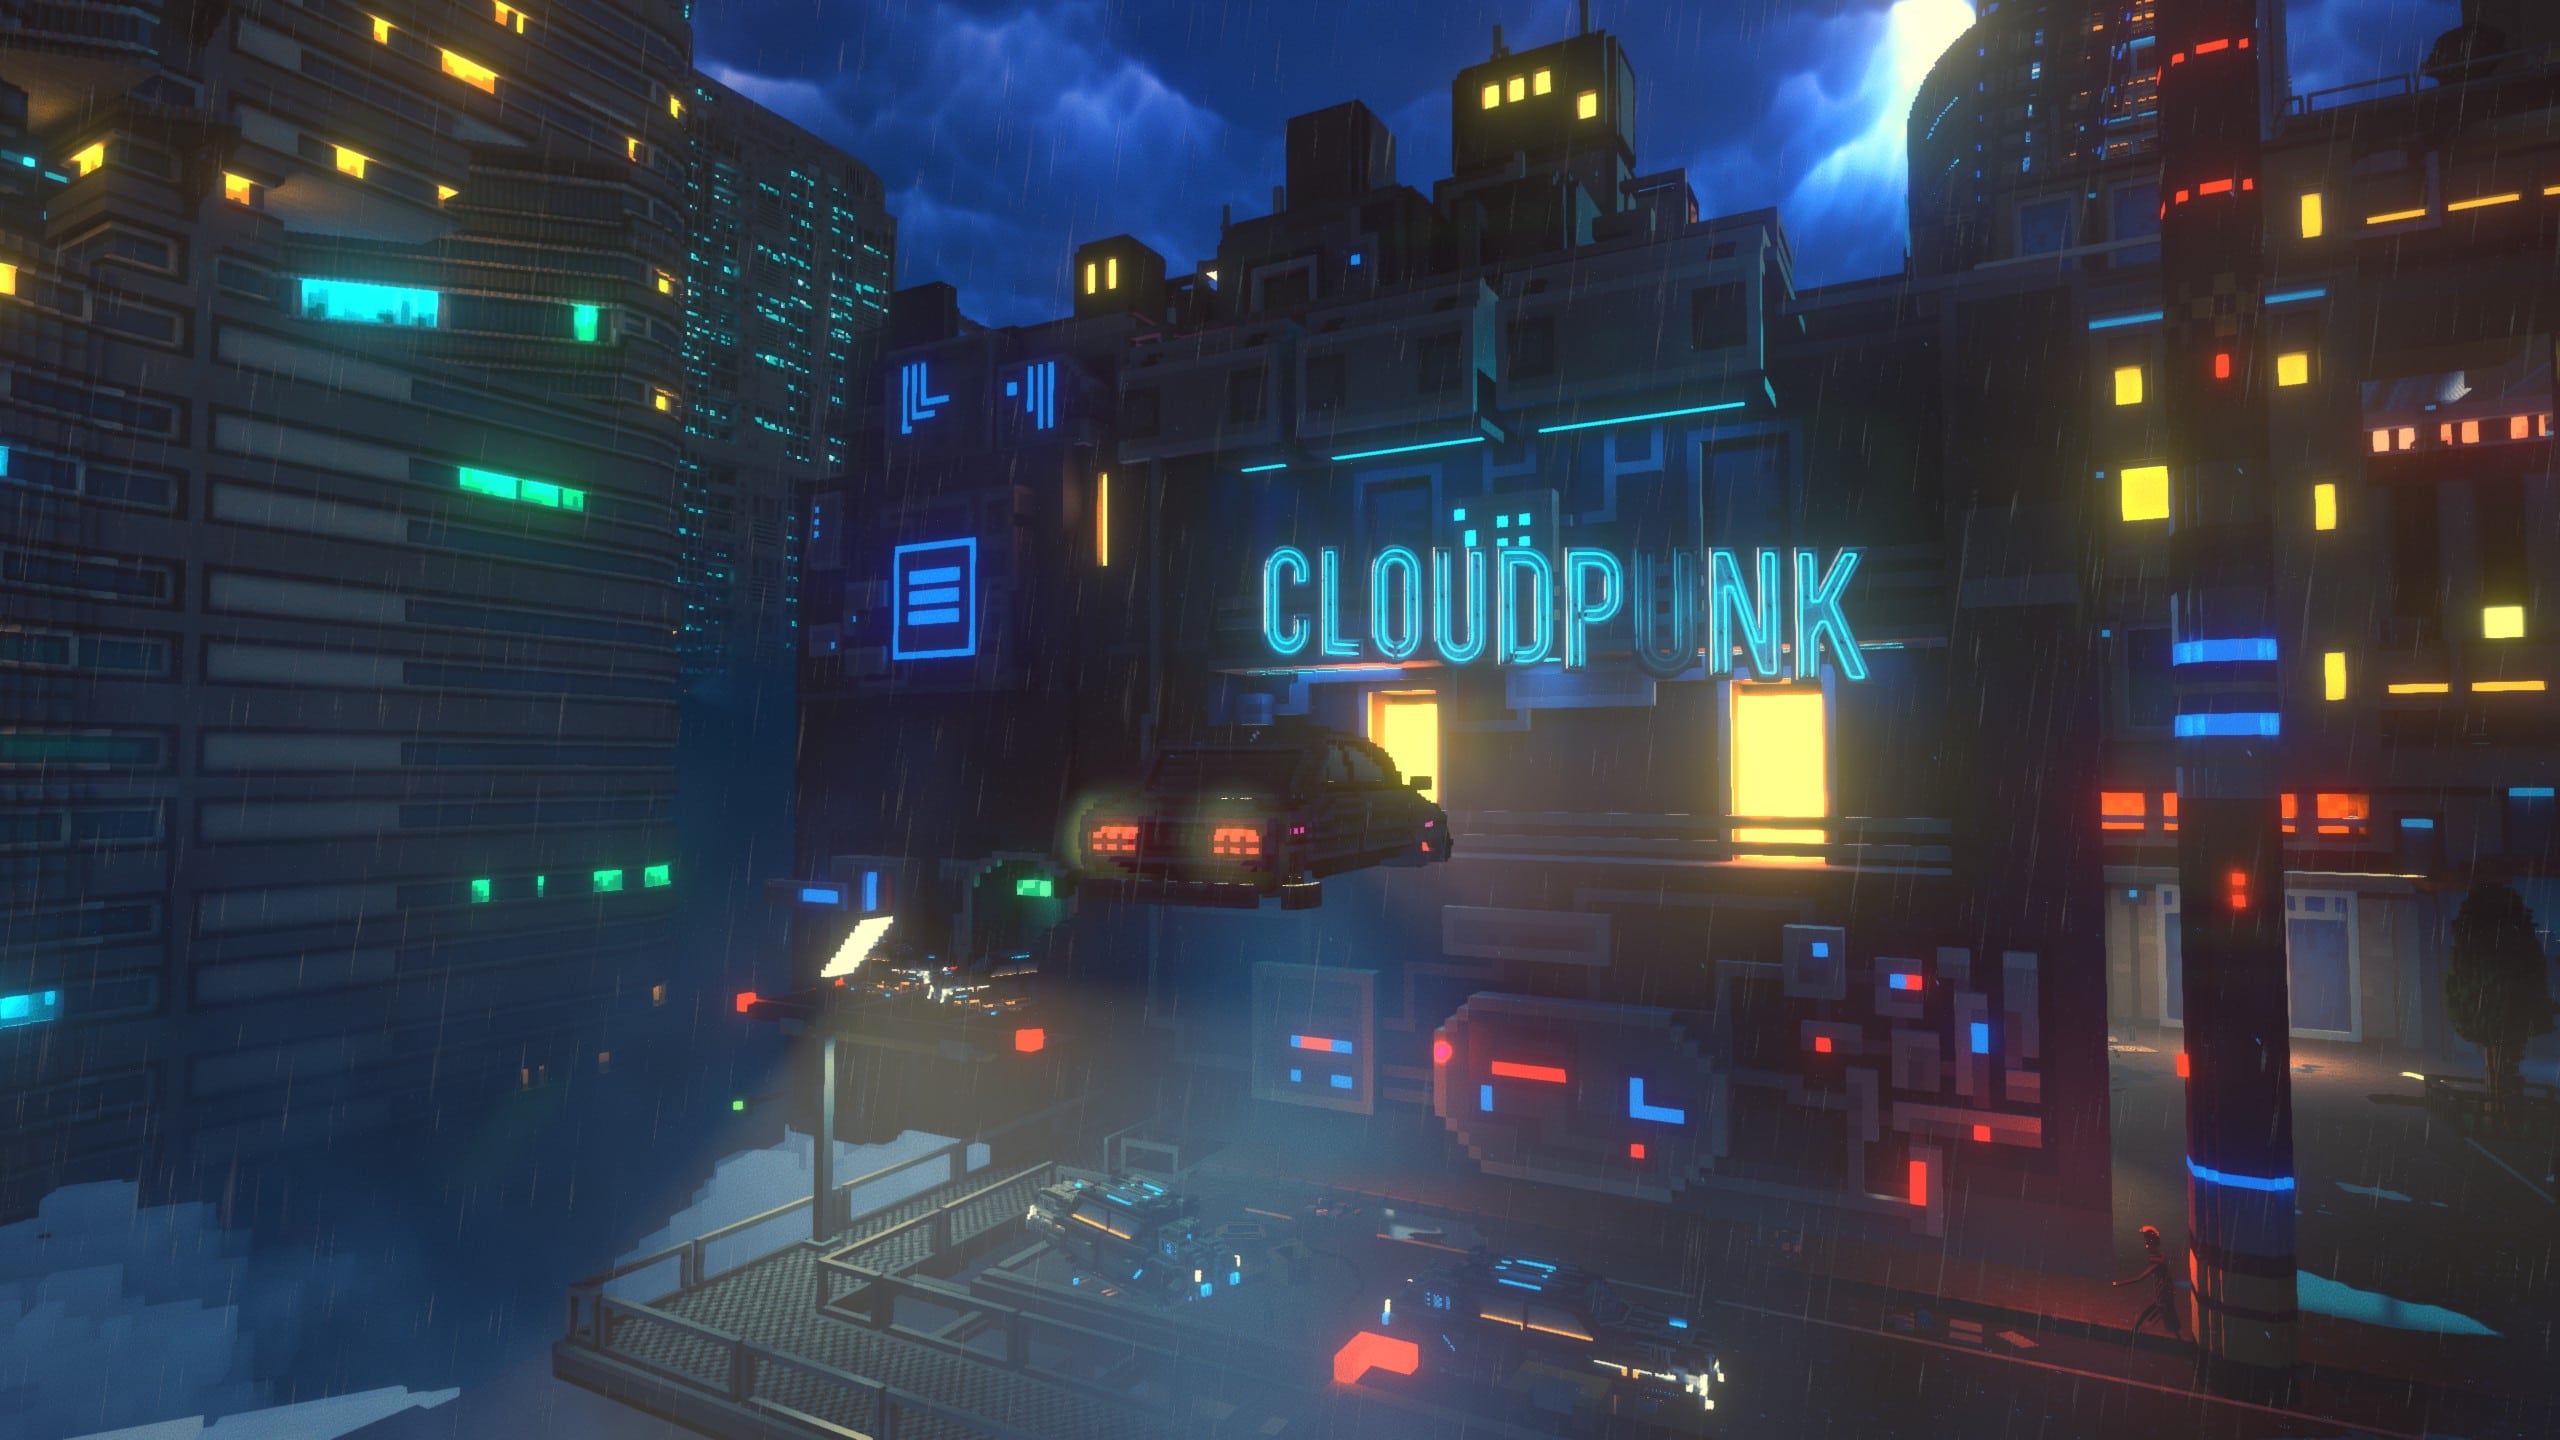 Cloudpunk Game 2020 Wallpapers